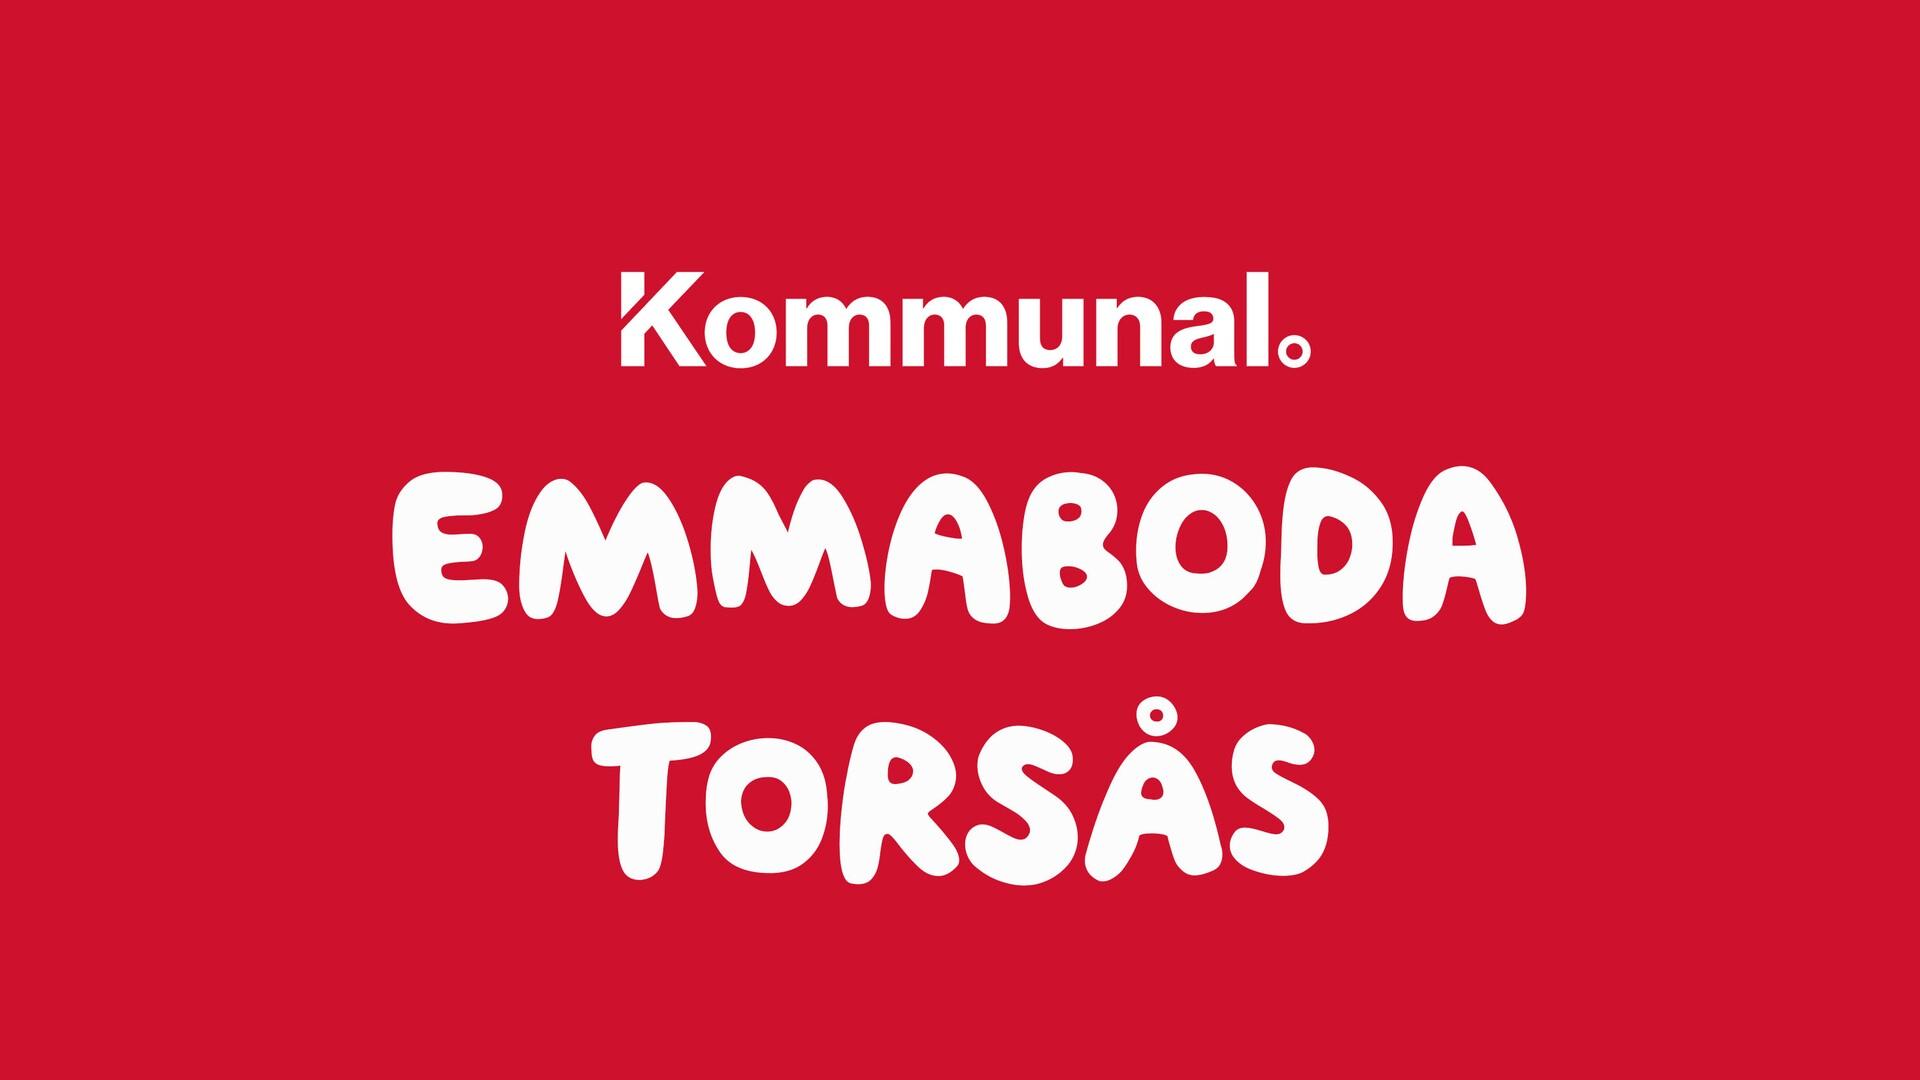 Kommunal Emmaboda-Torsås